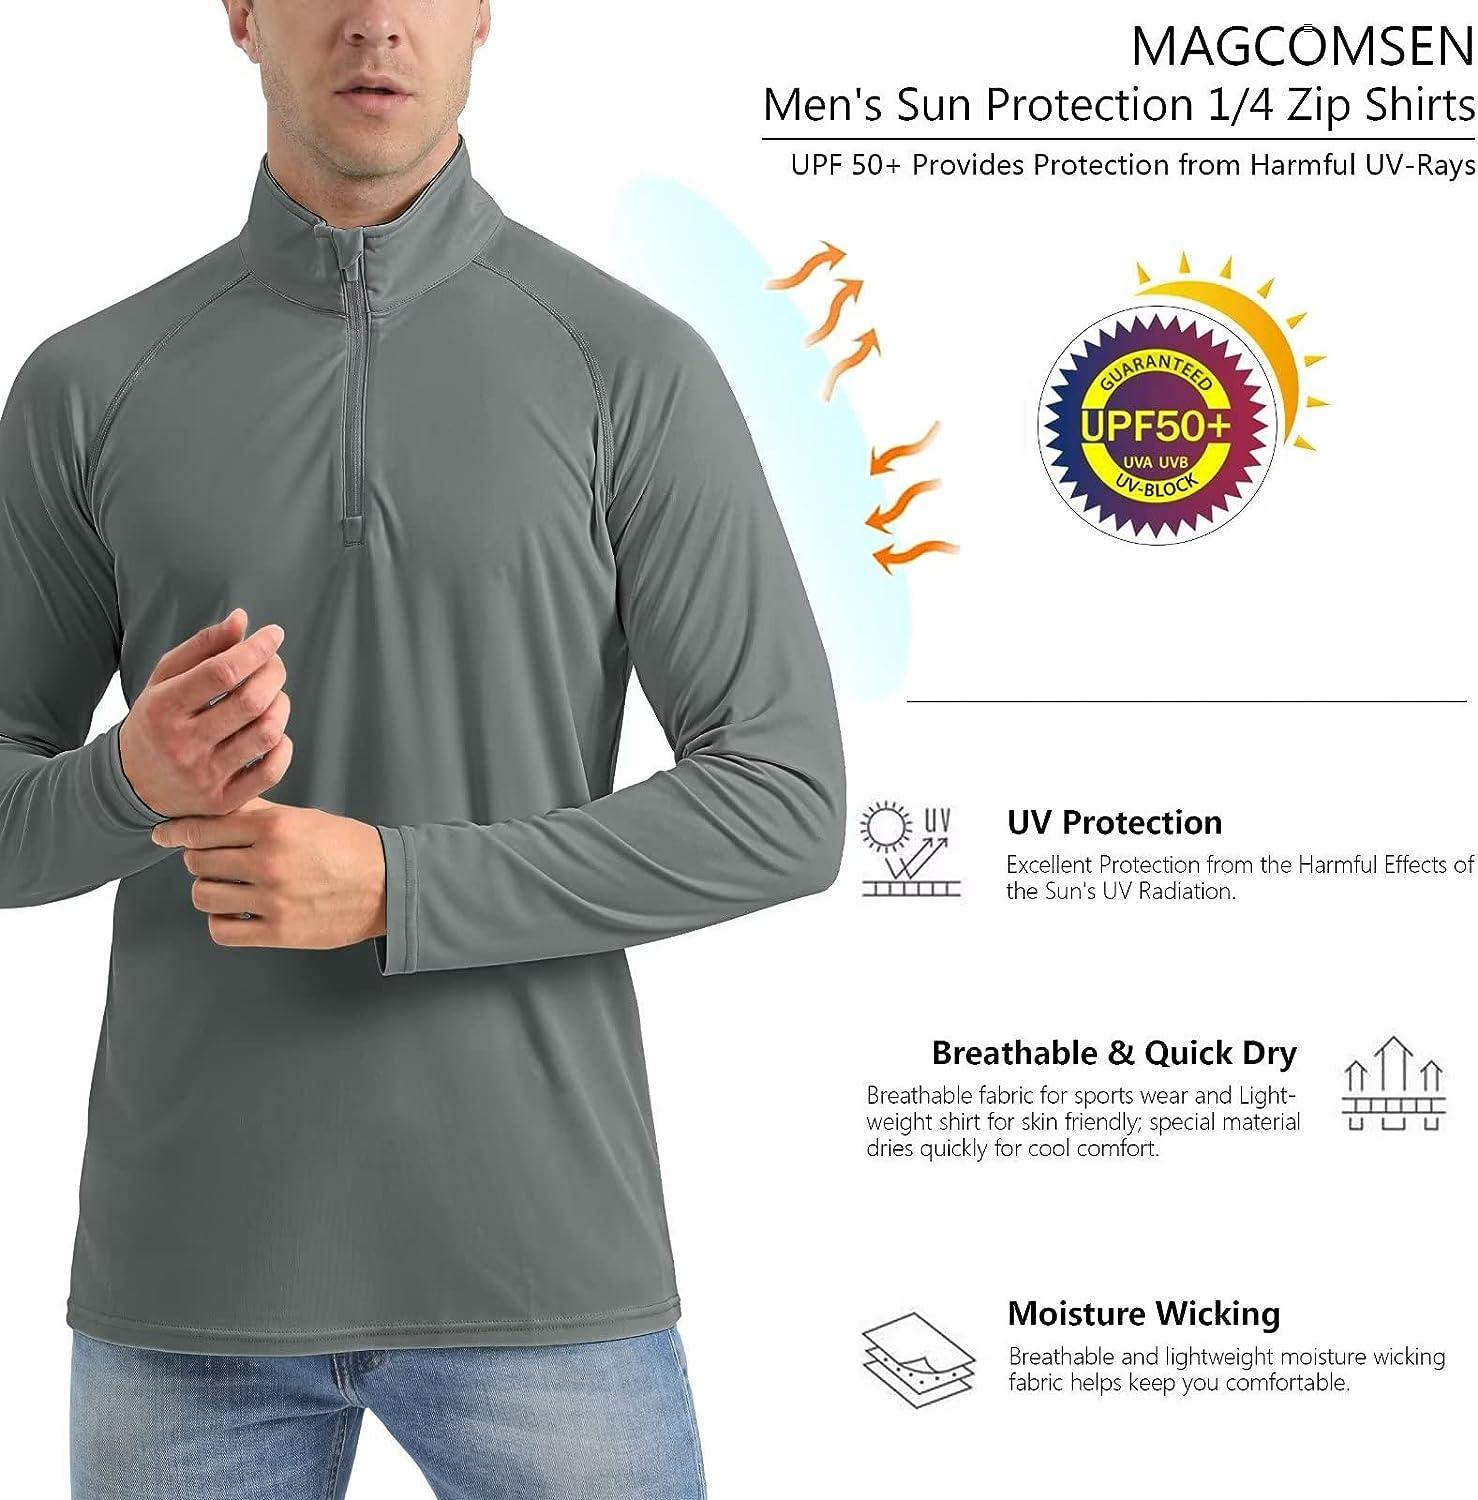 MAGCOMSEN Men's Long Sleeve Sun Shirts UPF 50+ Tees 1/4 Zip Up